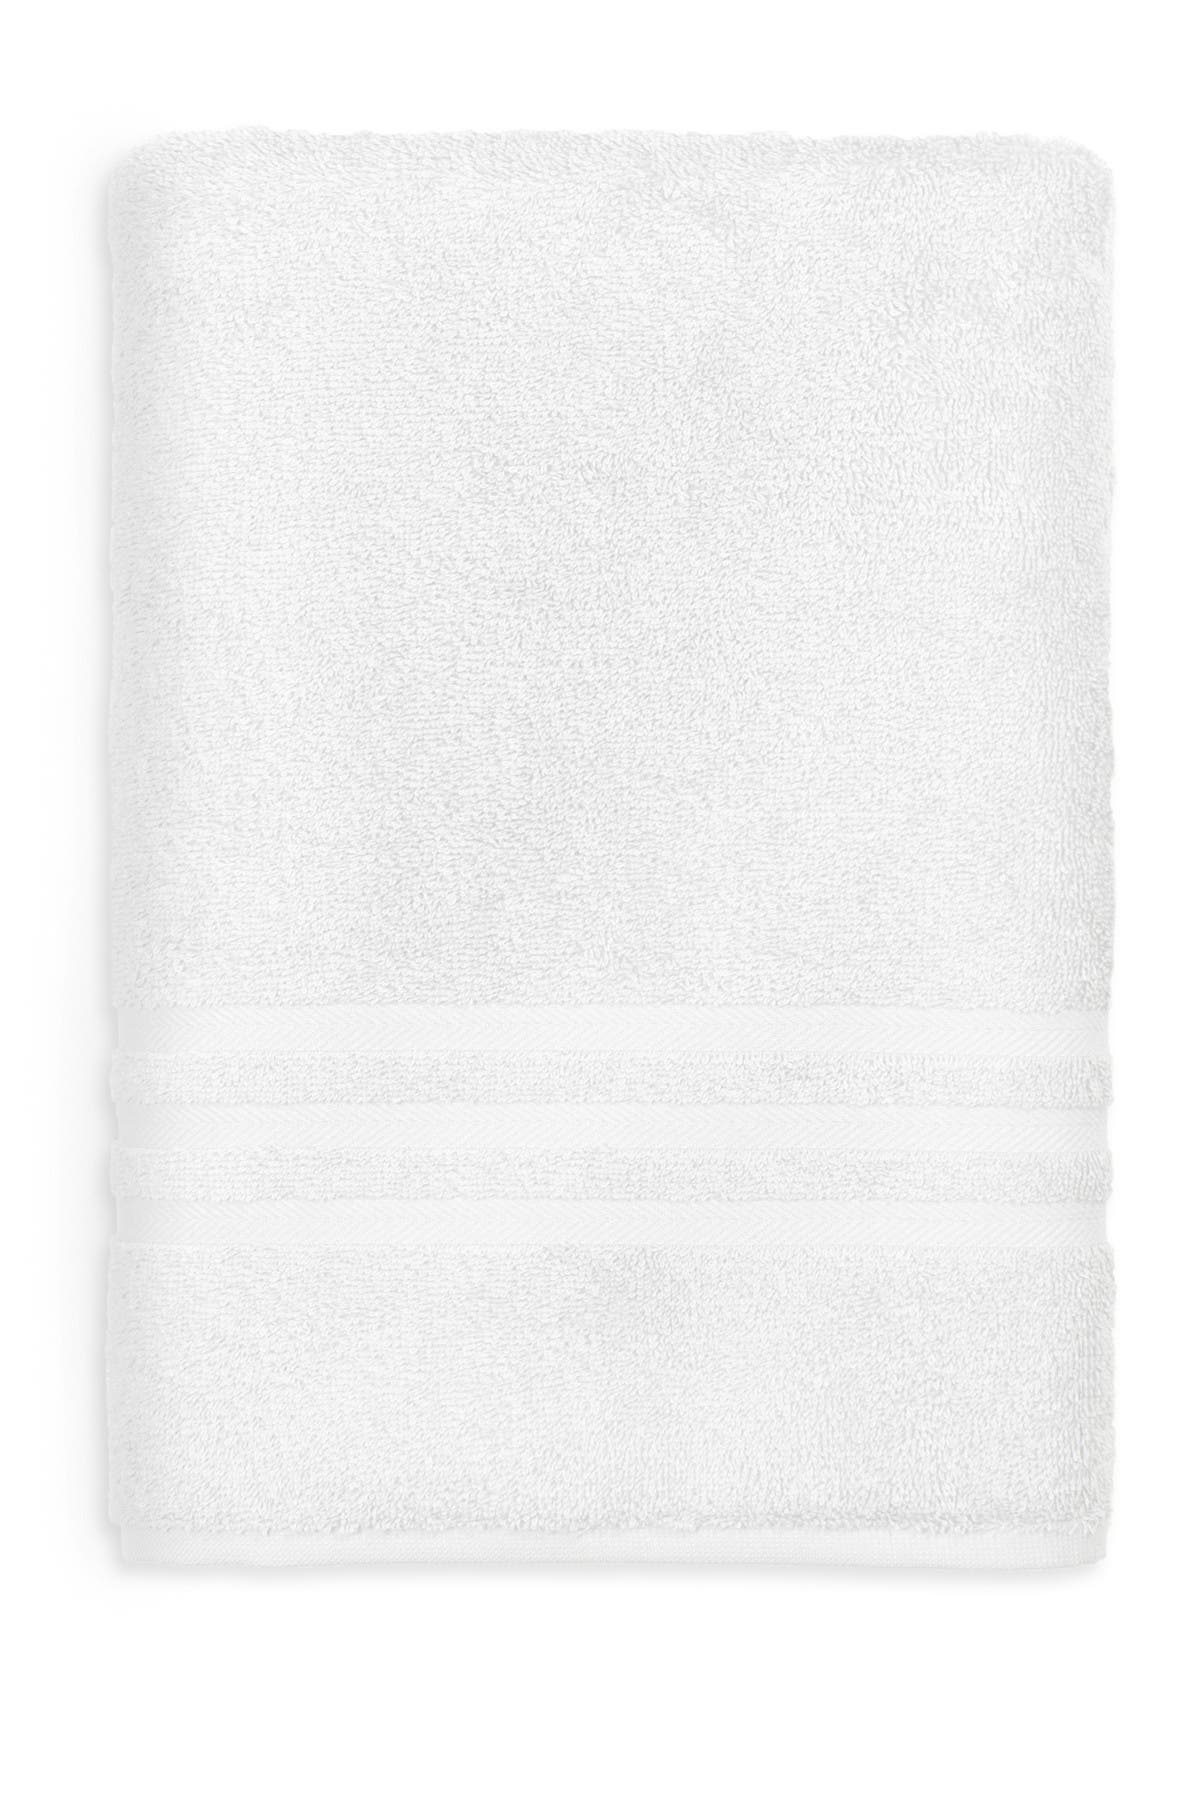 Linum Home Denzi Bath Sheet In White